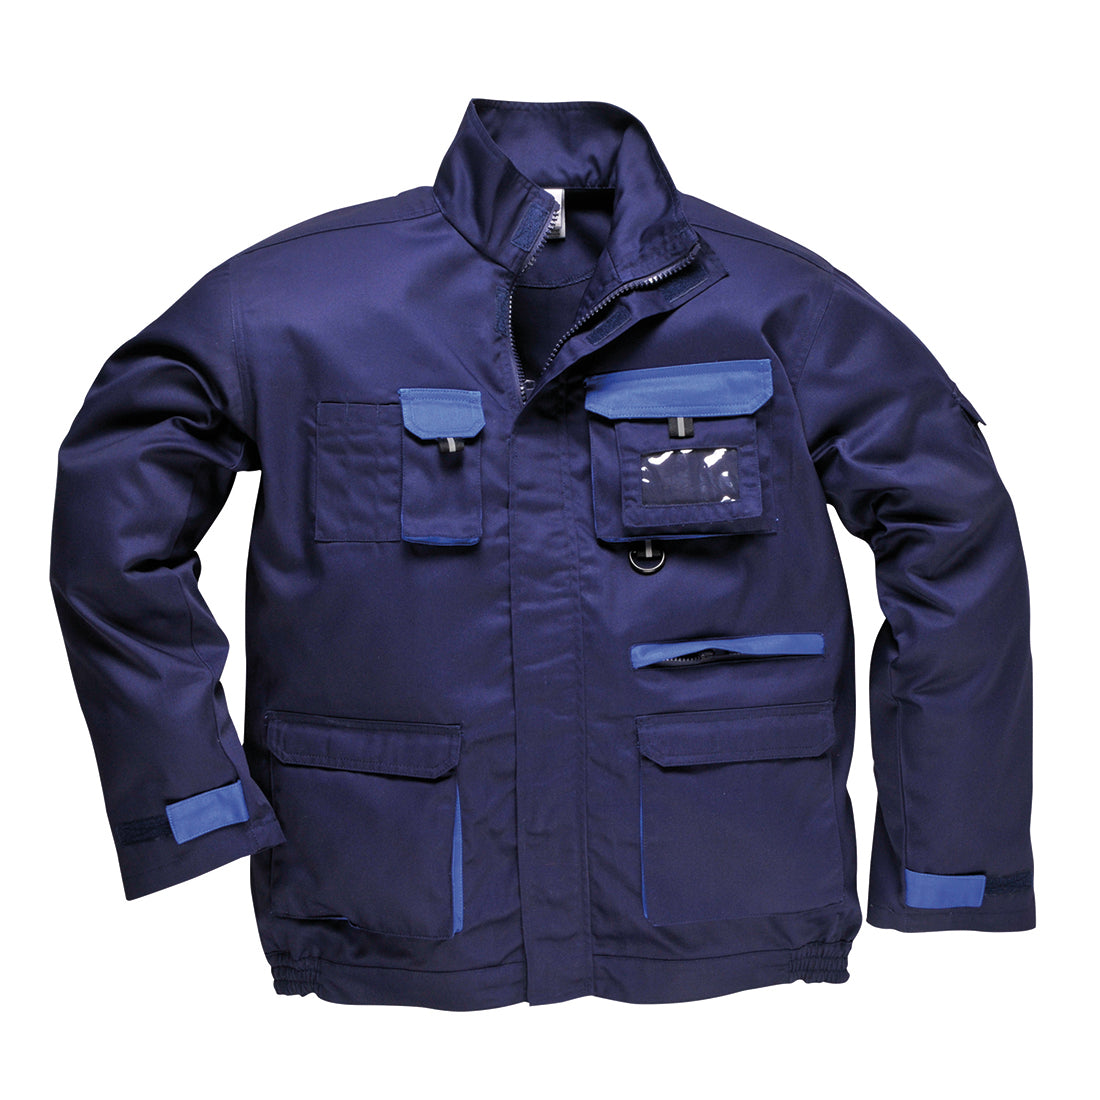 Portwest Texo Contrast Jacket